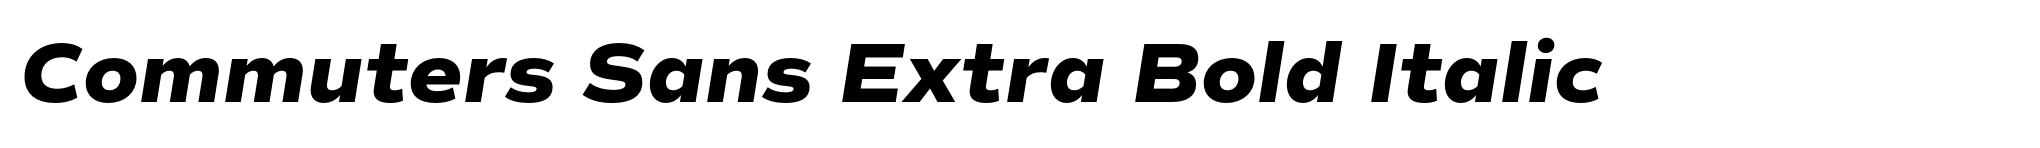 Commuters Sans Extra Bold Italic image